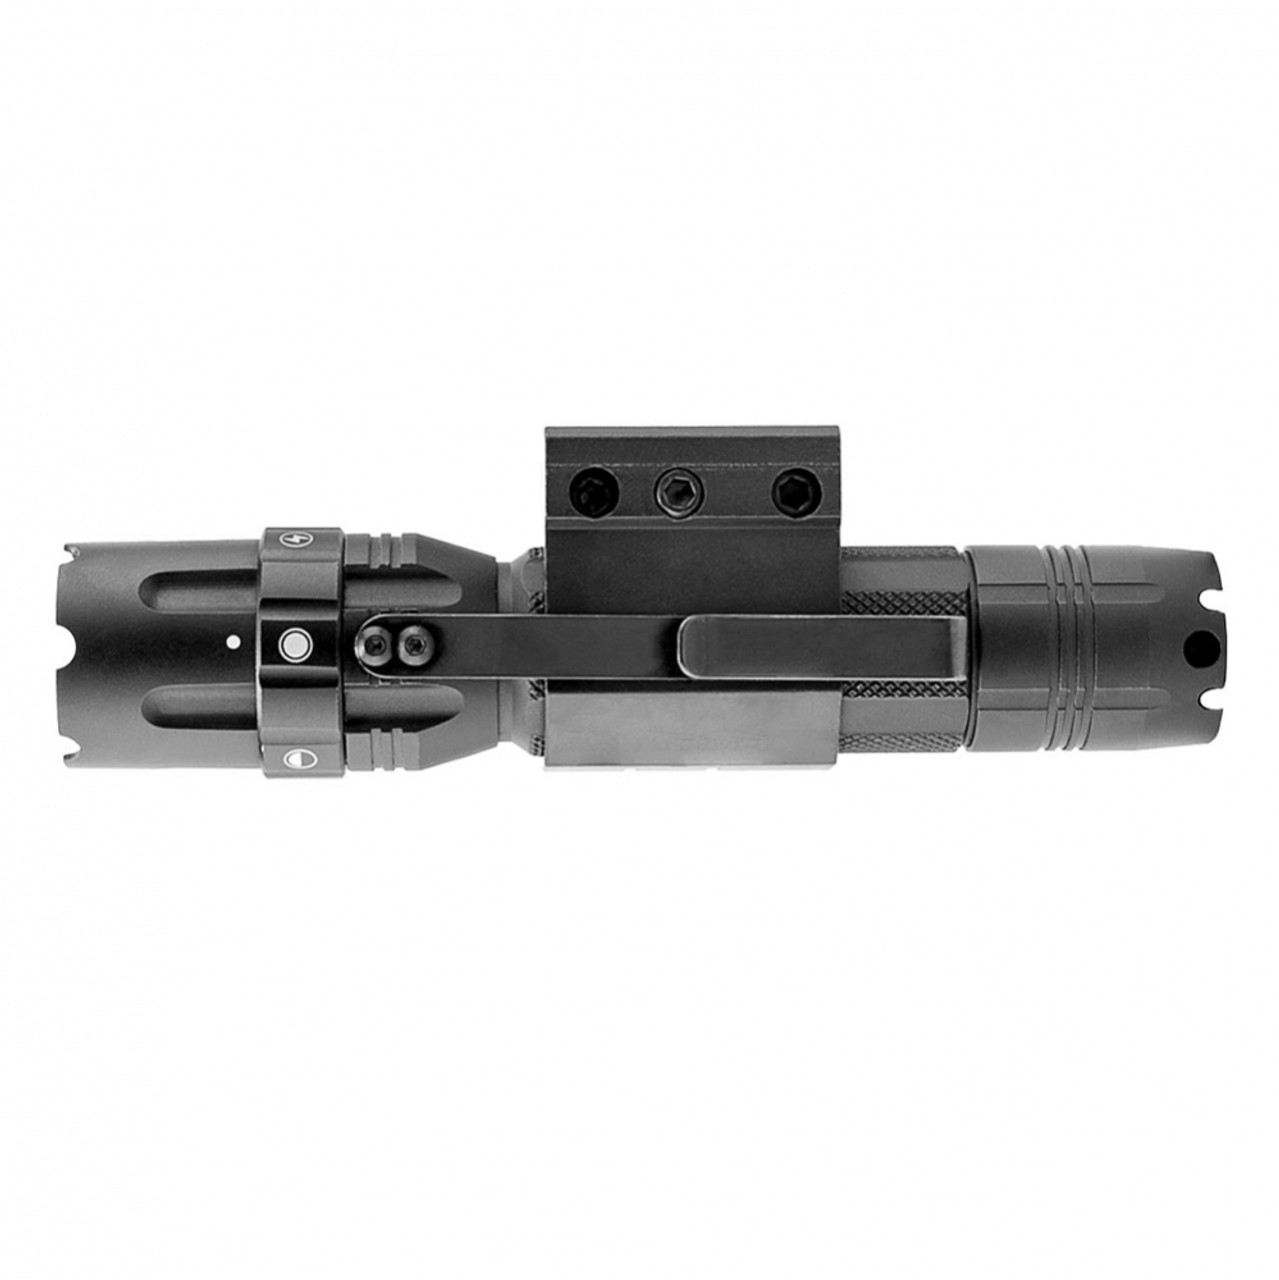 NcSTAR VATFLBMM2 Pro Series Flashlight Mod2/ 3W 500 Lumen/ Modes: High - Low - Strobe/ Rail Mount